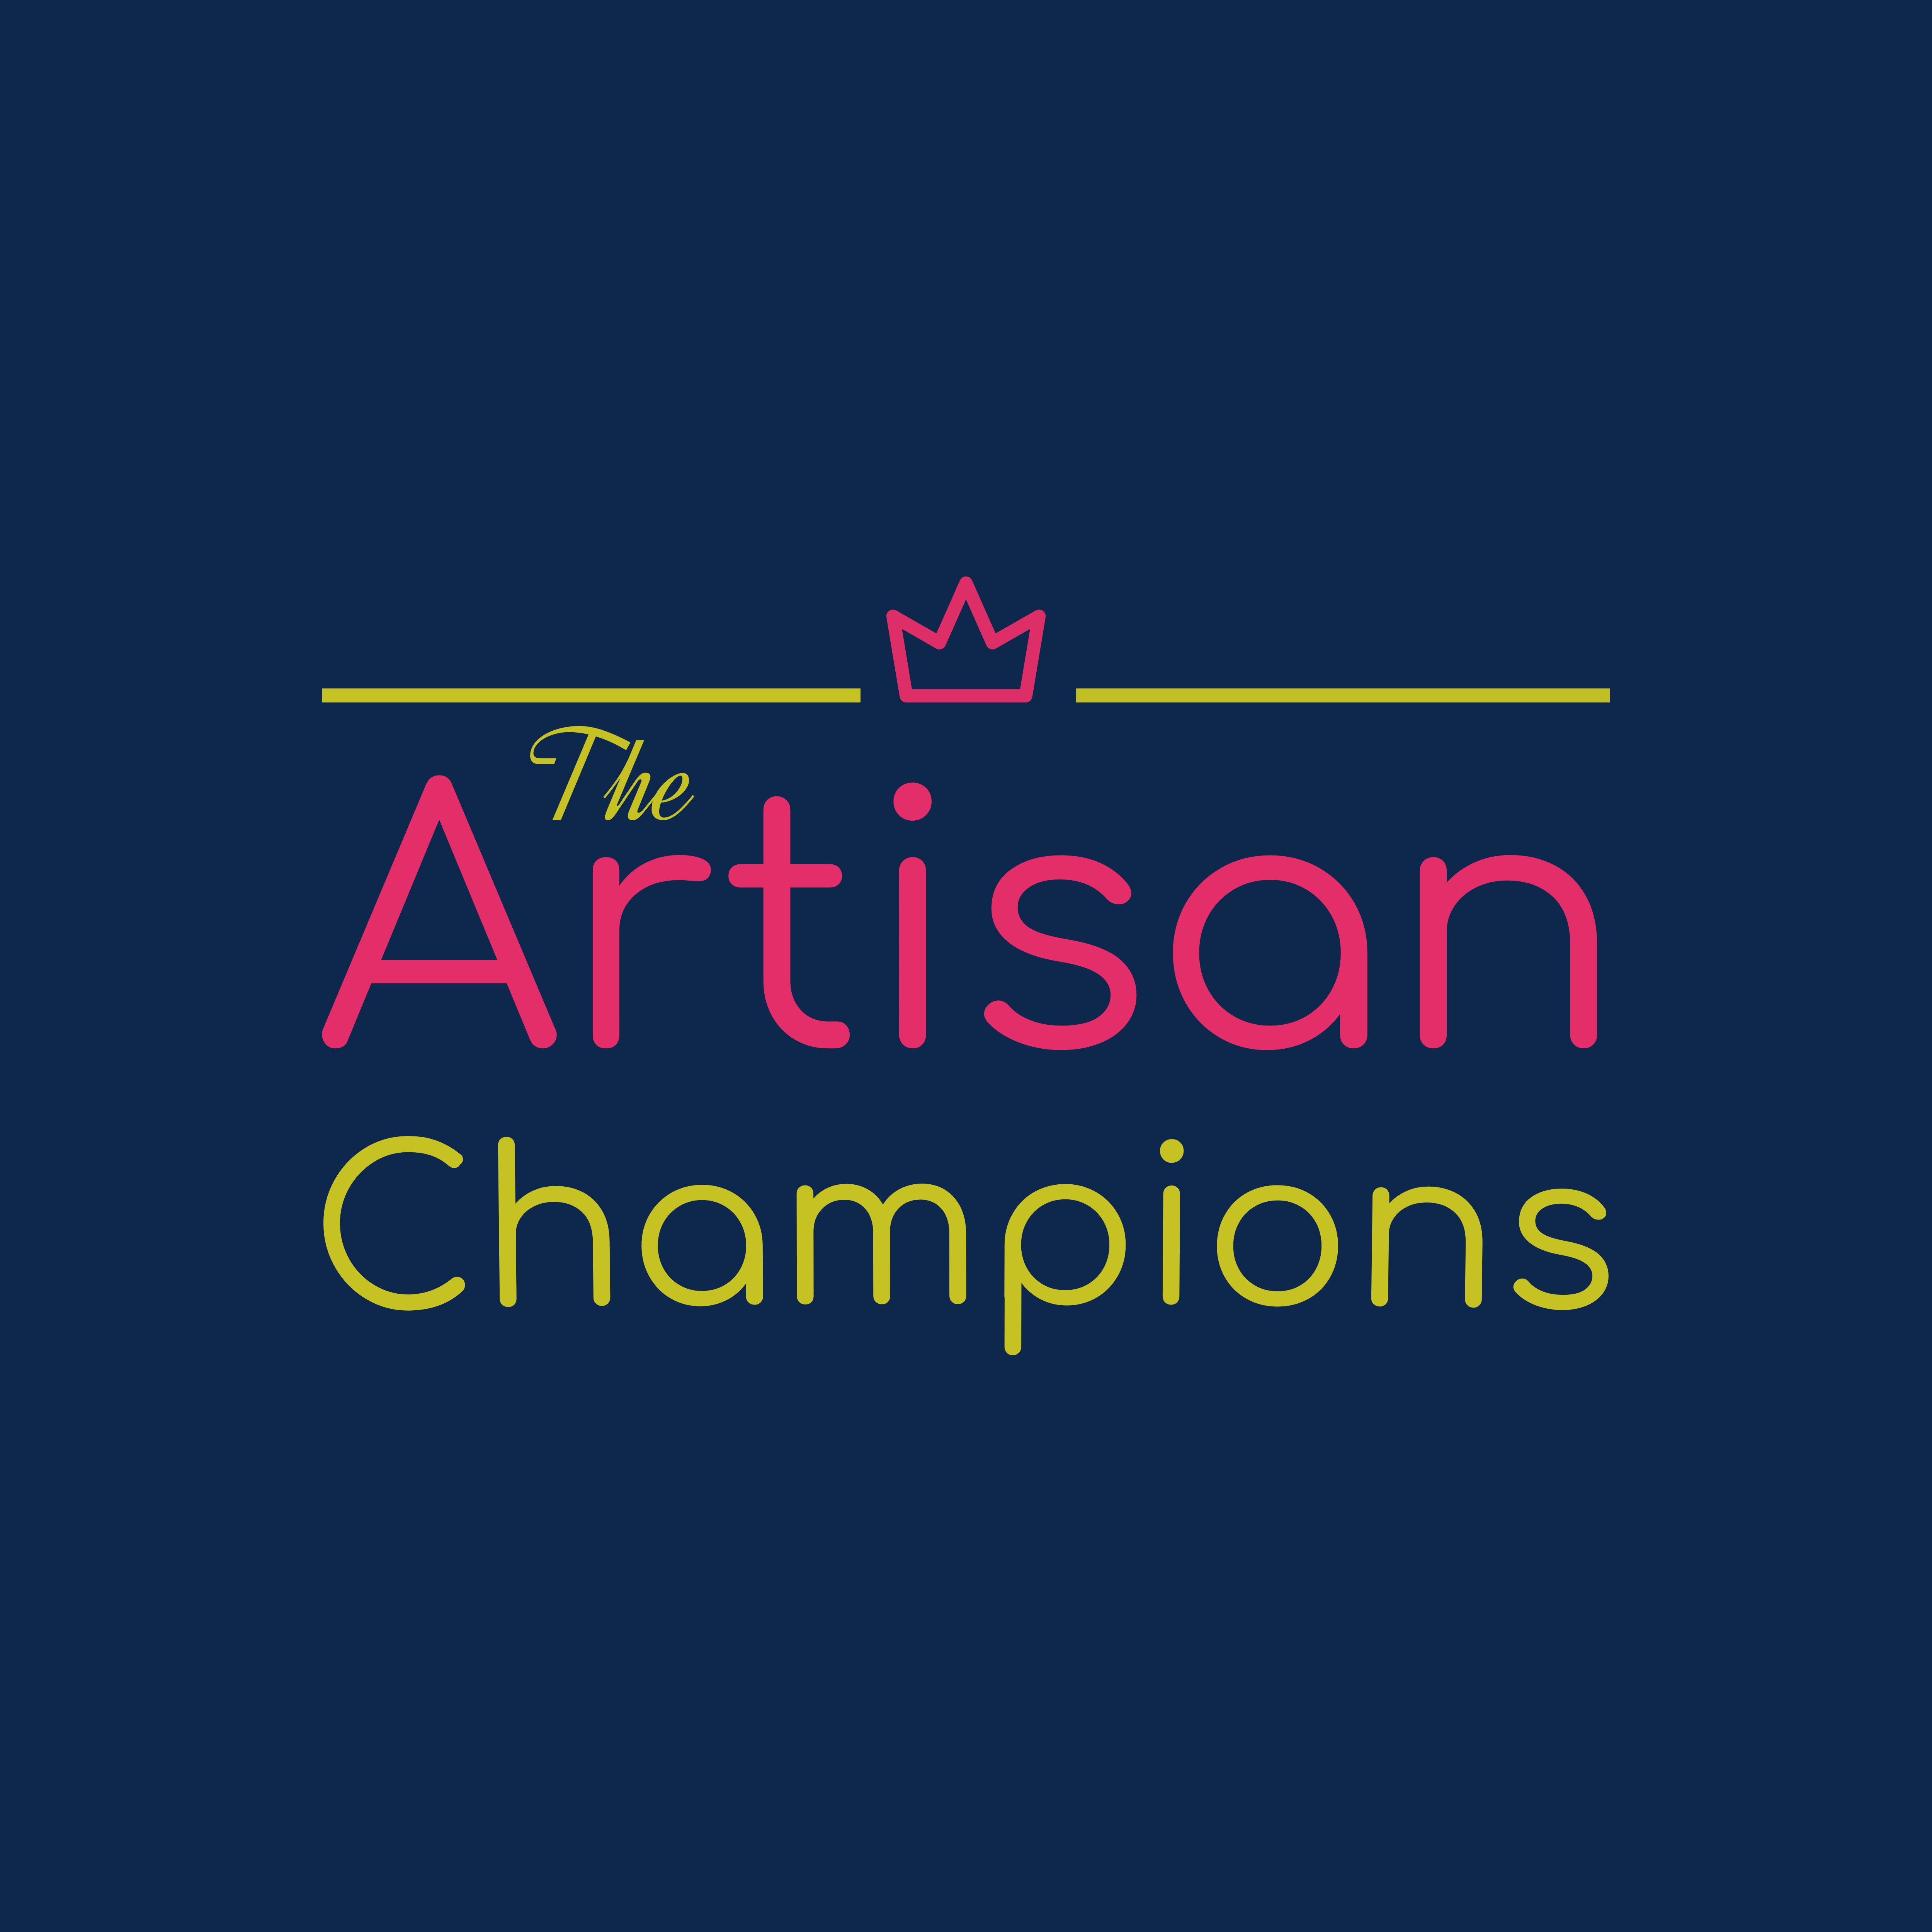 The Artisan Champions Ltd